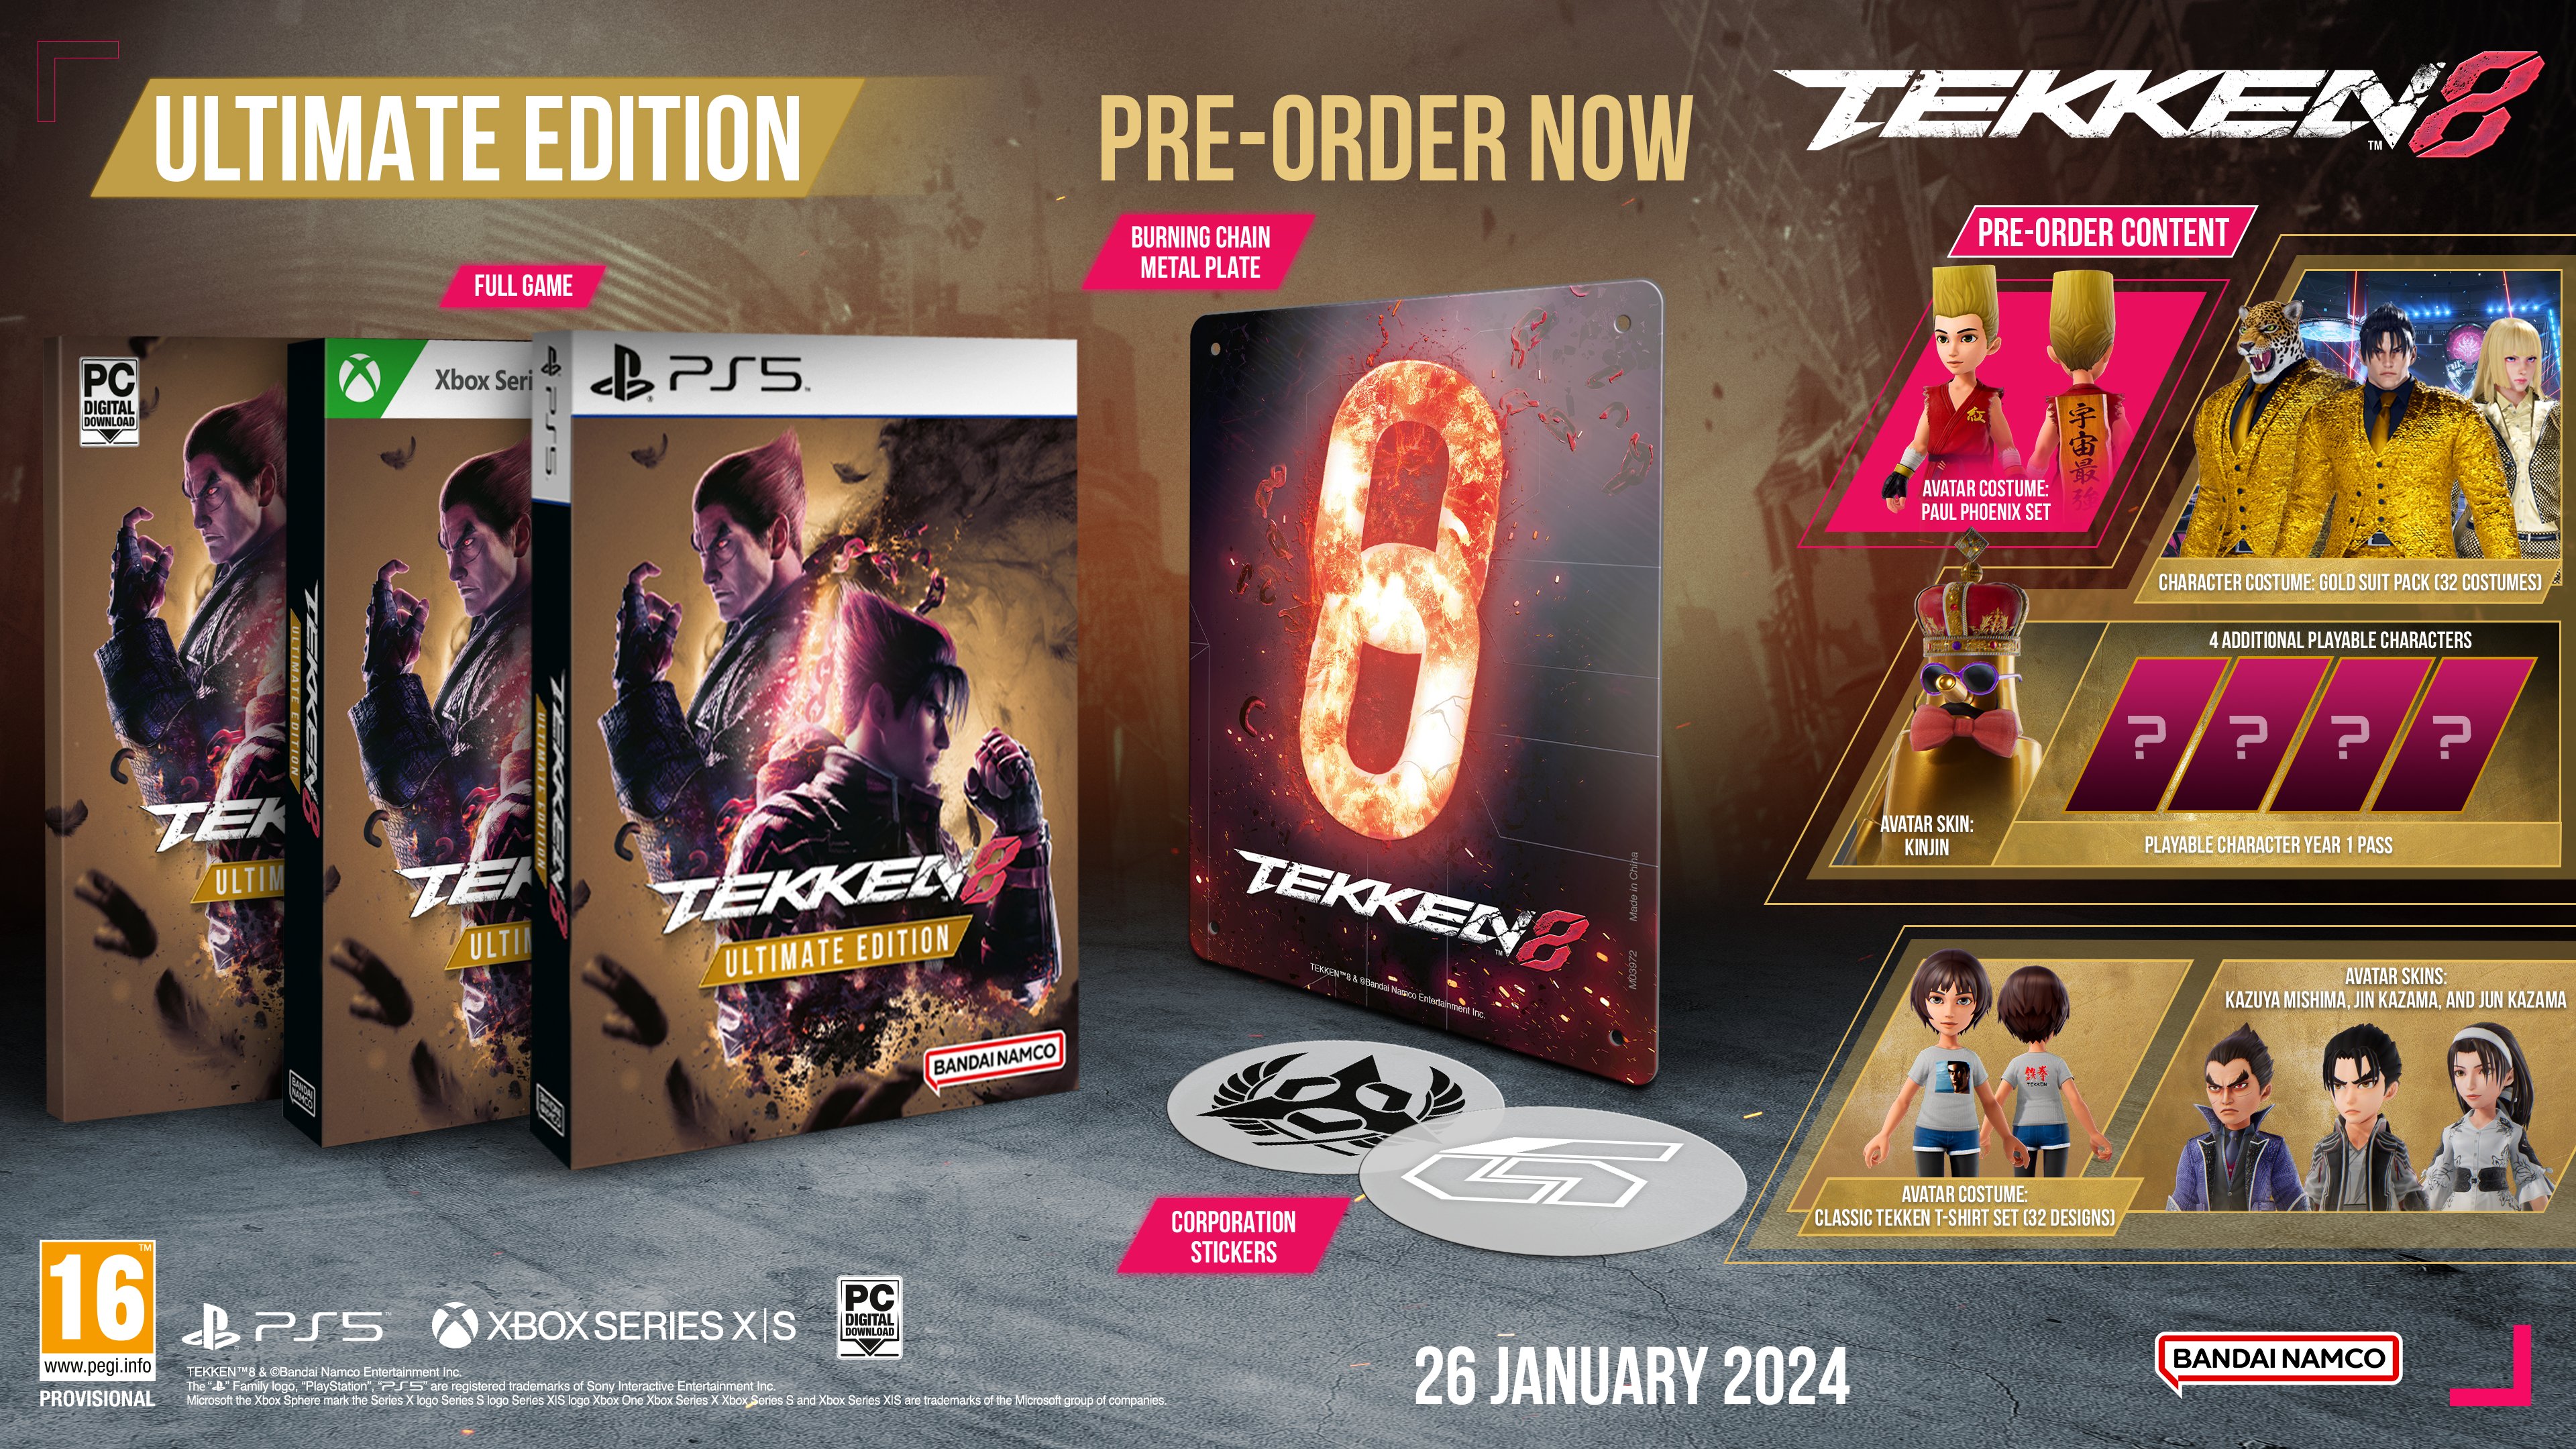 Tekken 8 Premium Collector's Edition for PlayStation 5